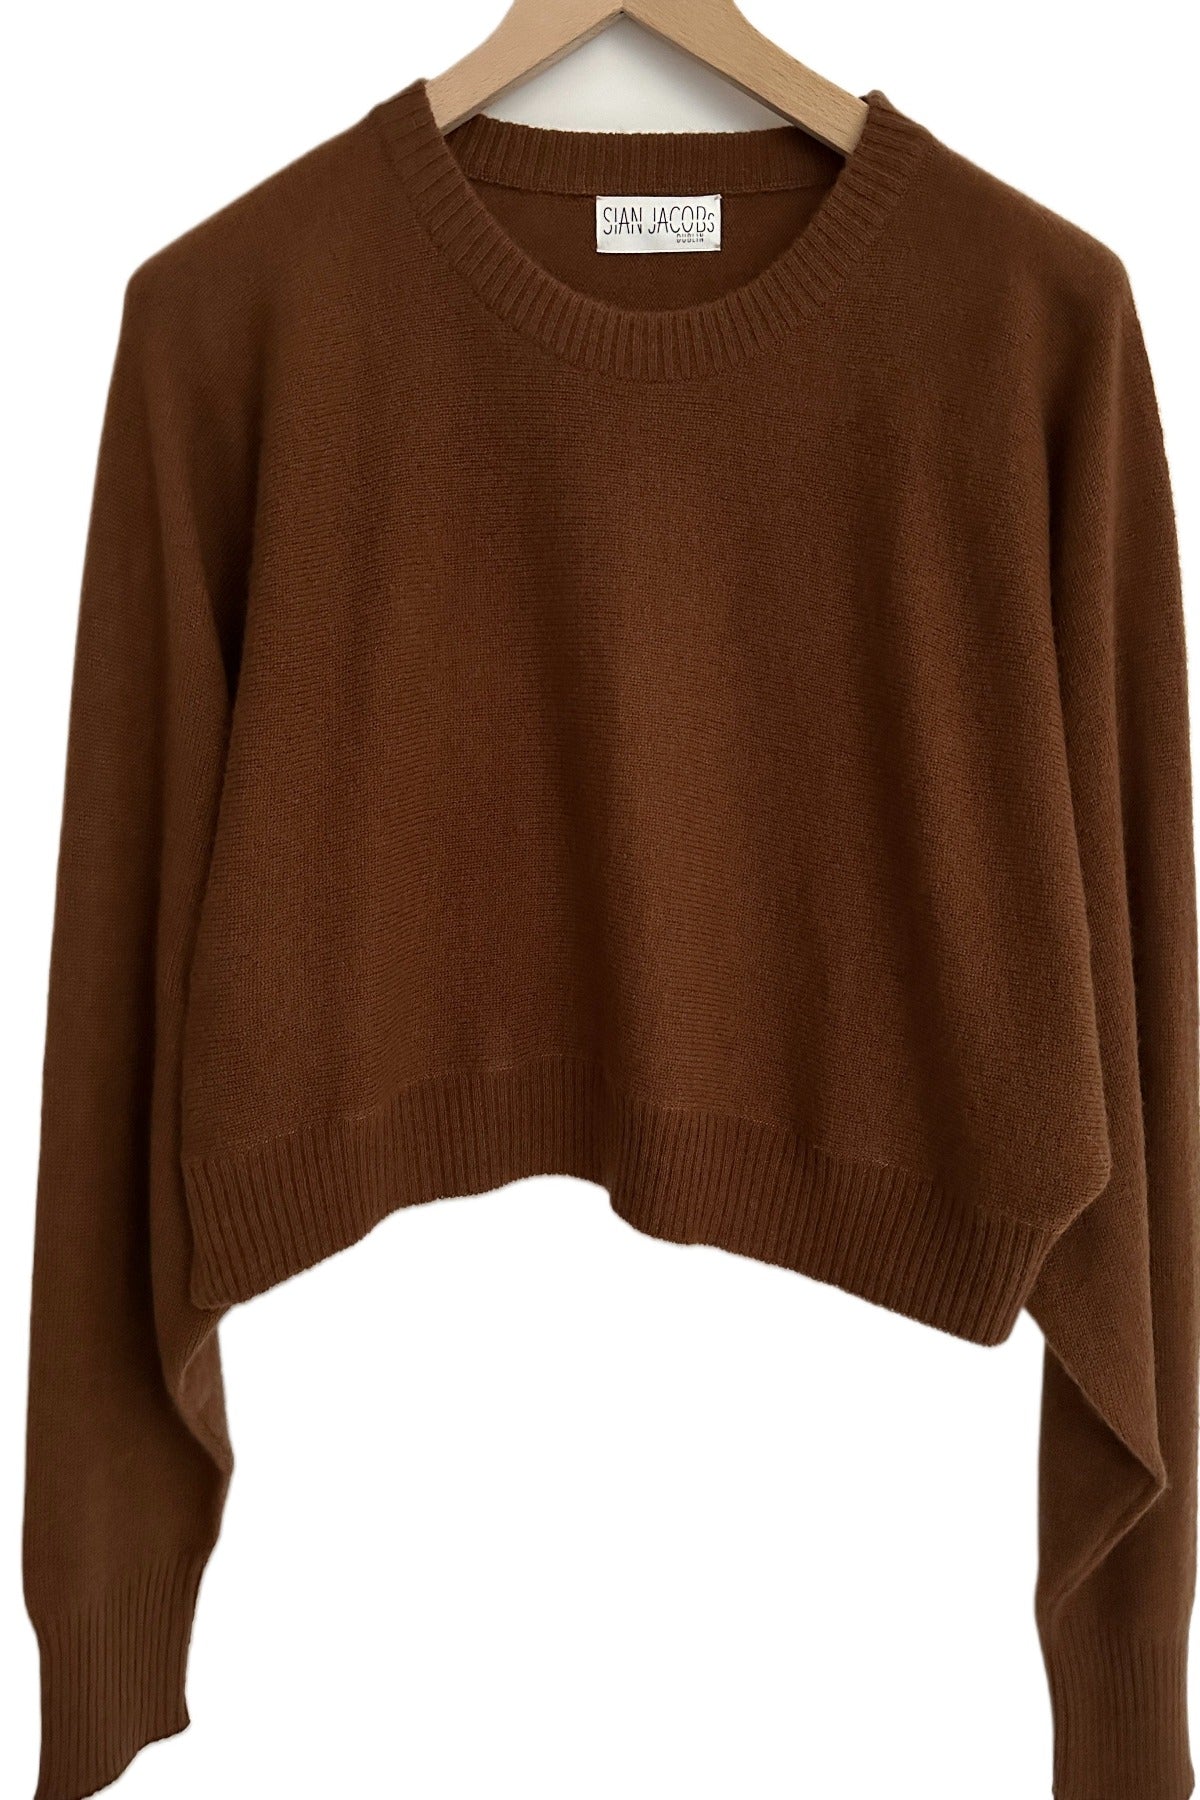 kurt nut brown sweater on hanger